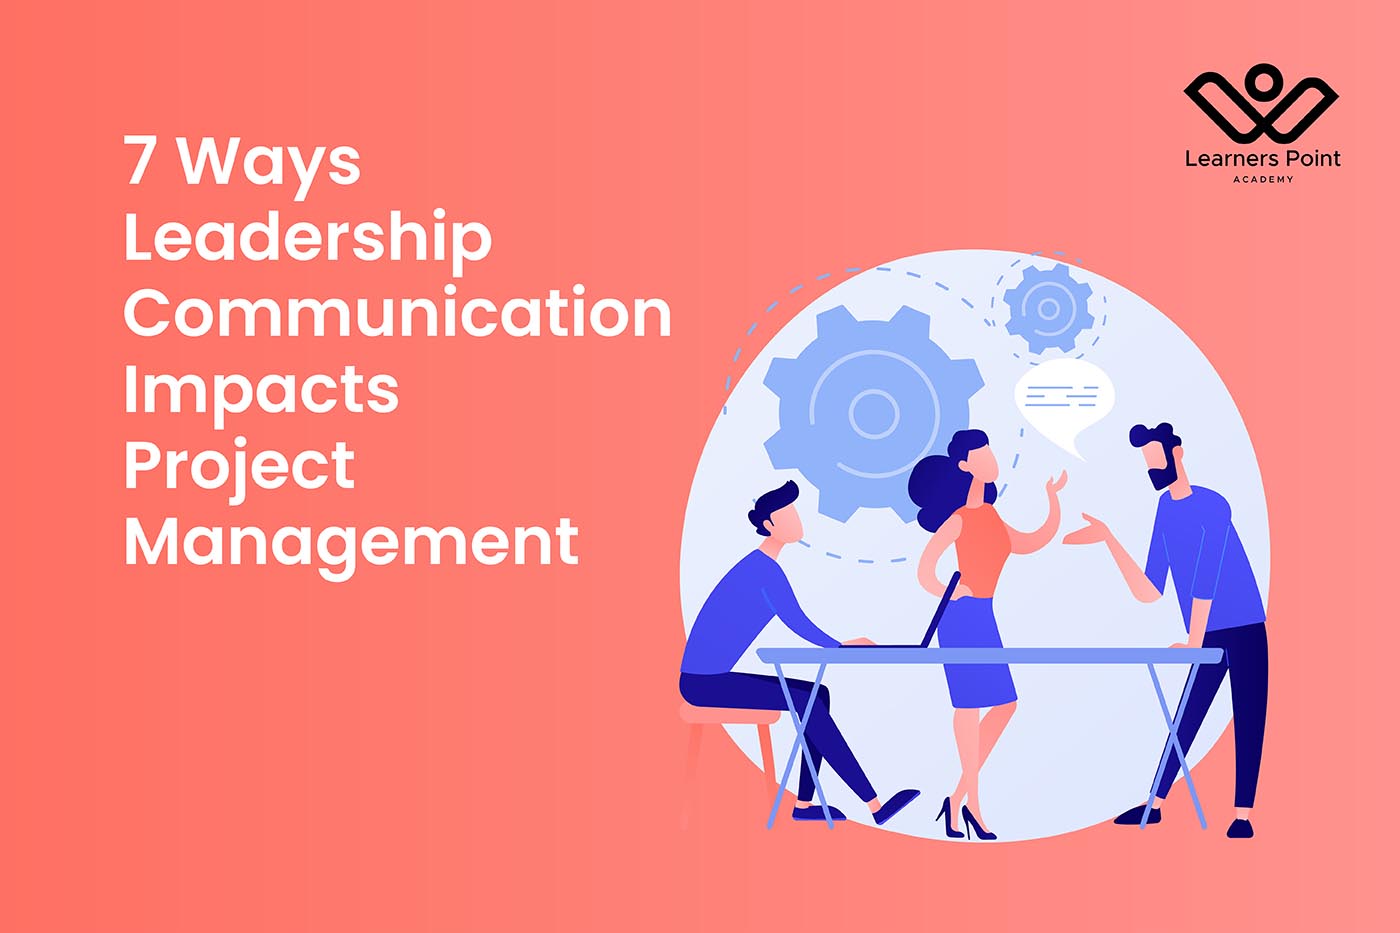 7 Ways Leadership Communication Impacts Project Management